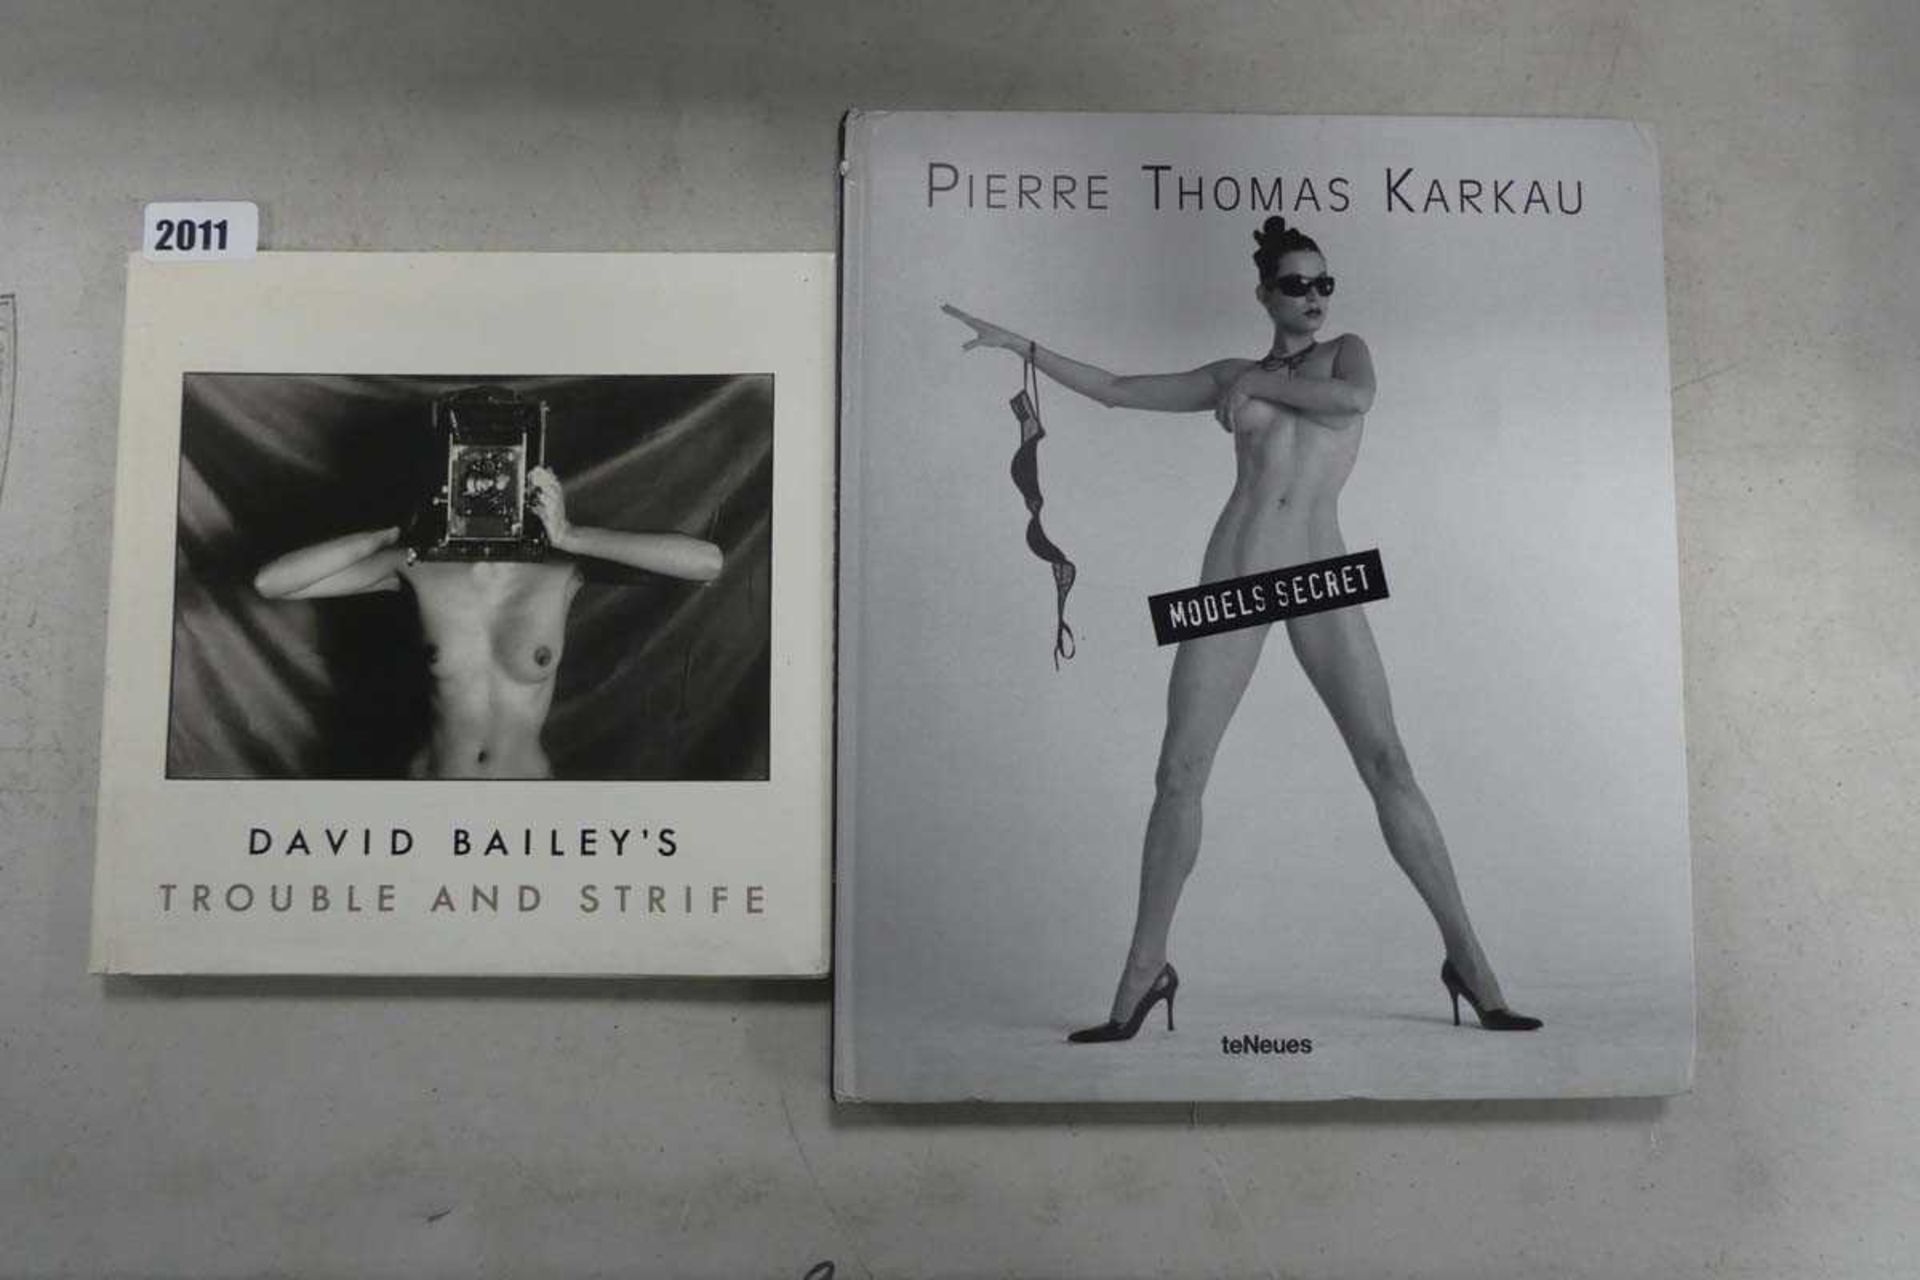 Pierre Thomas Karkau 'Model Secret' and David Bailey's 'Trouble and Strife' books